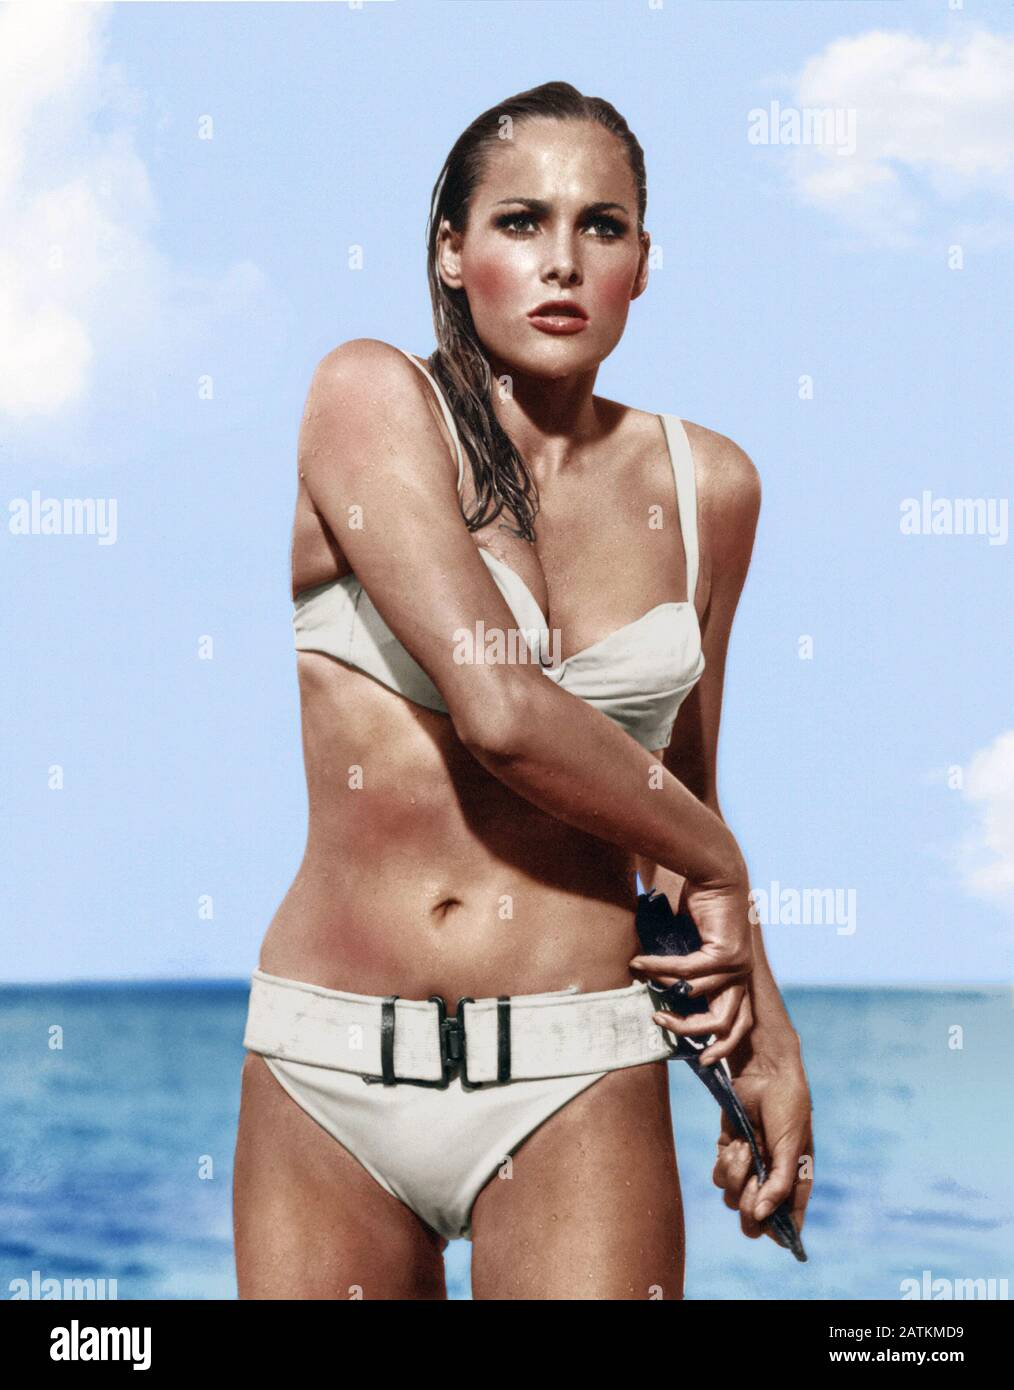 Ursula andress bikini hi-res stock photography and images - Alamy